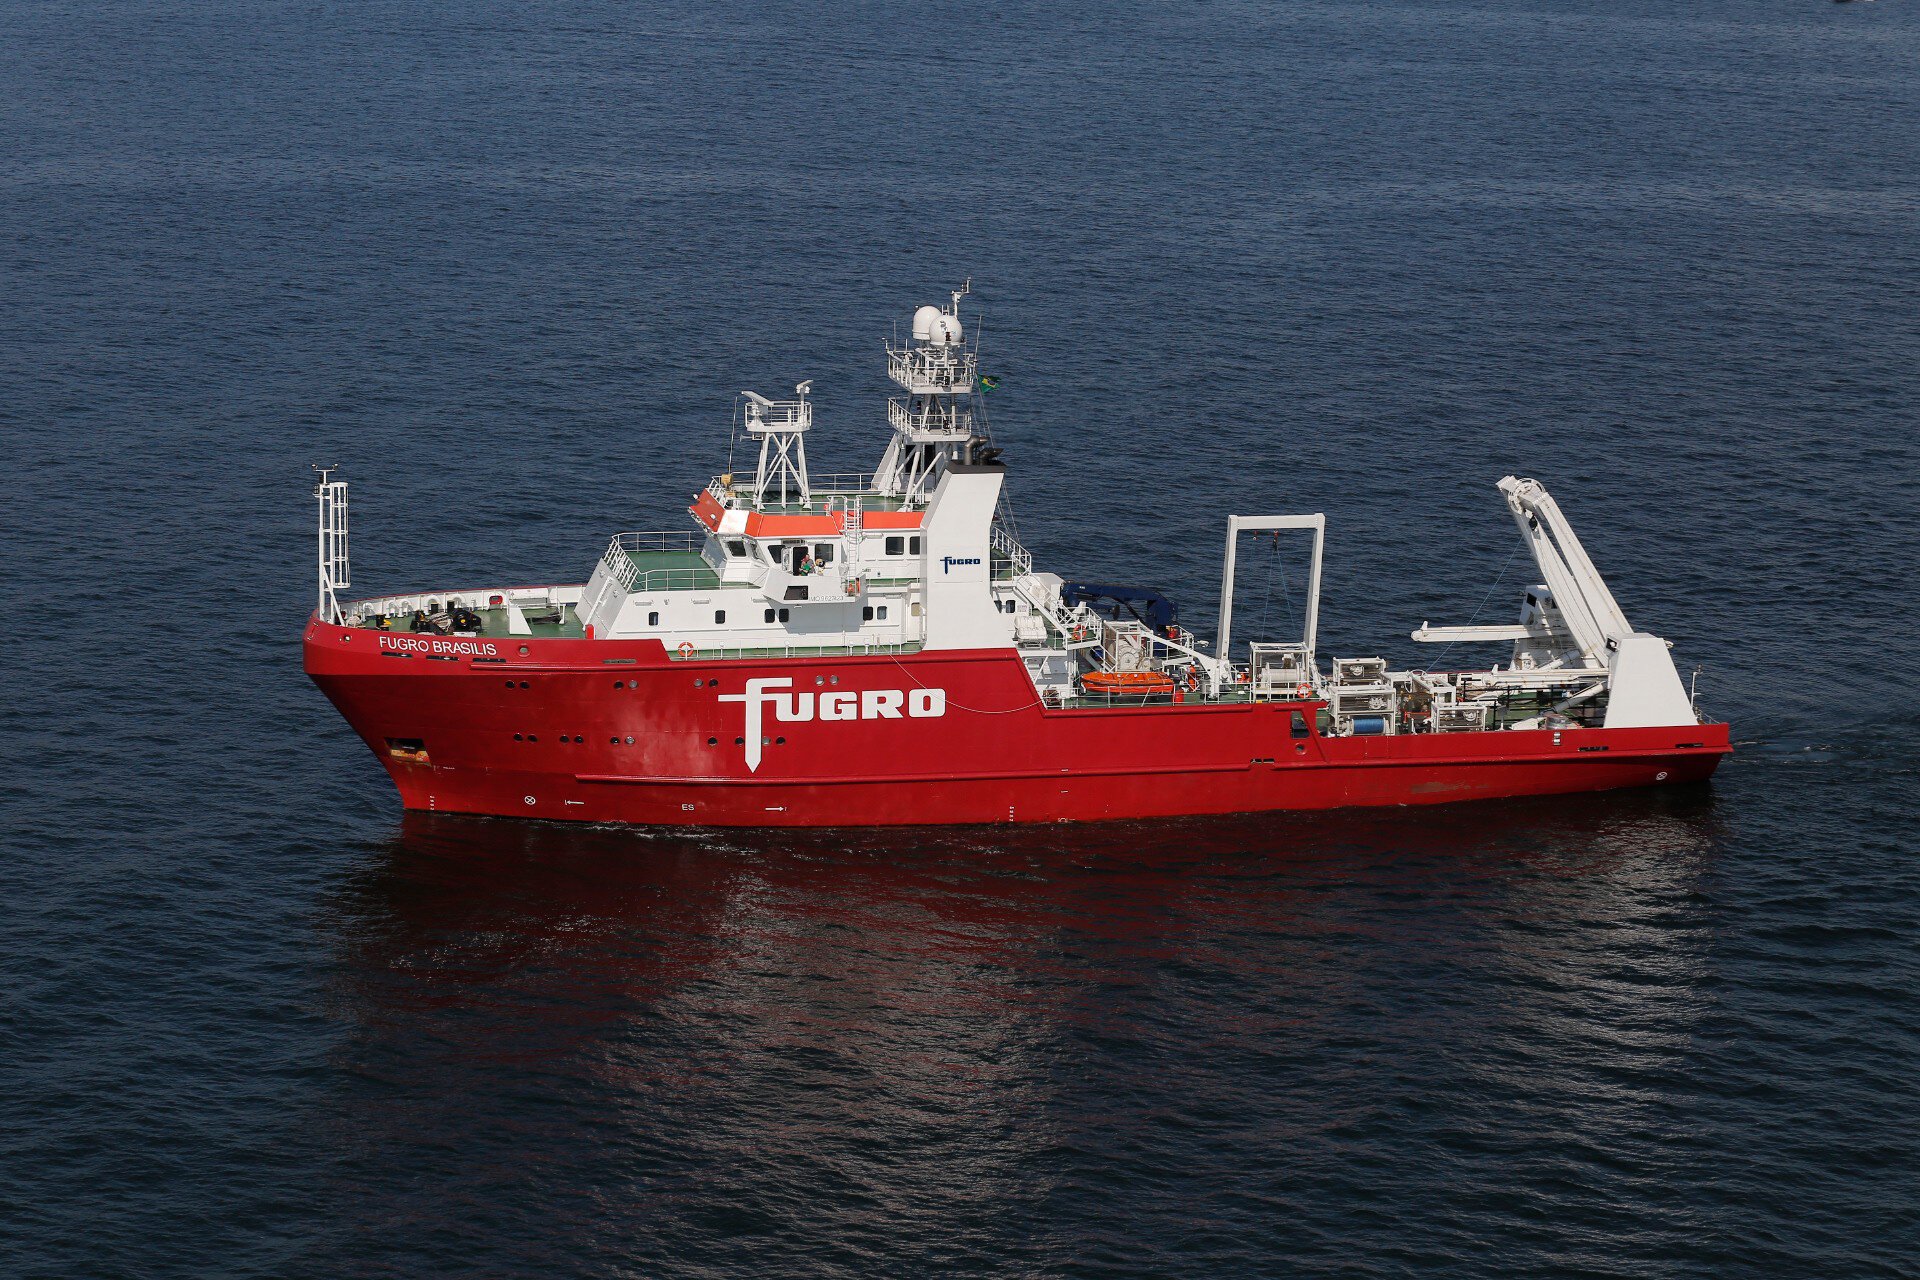 _48A2426
Survey vessel Fugro Brasilis, Guanabara Bay, Brazil. Geophysical and environmental baseline survey.